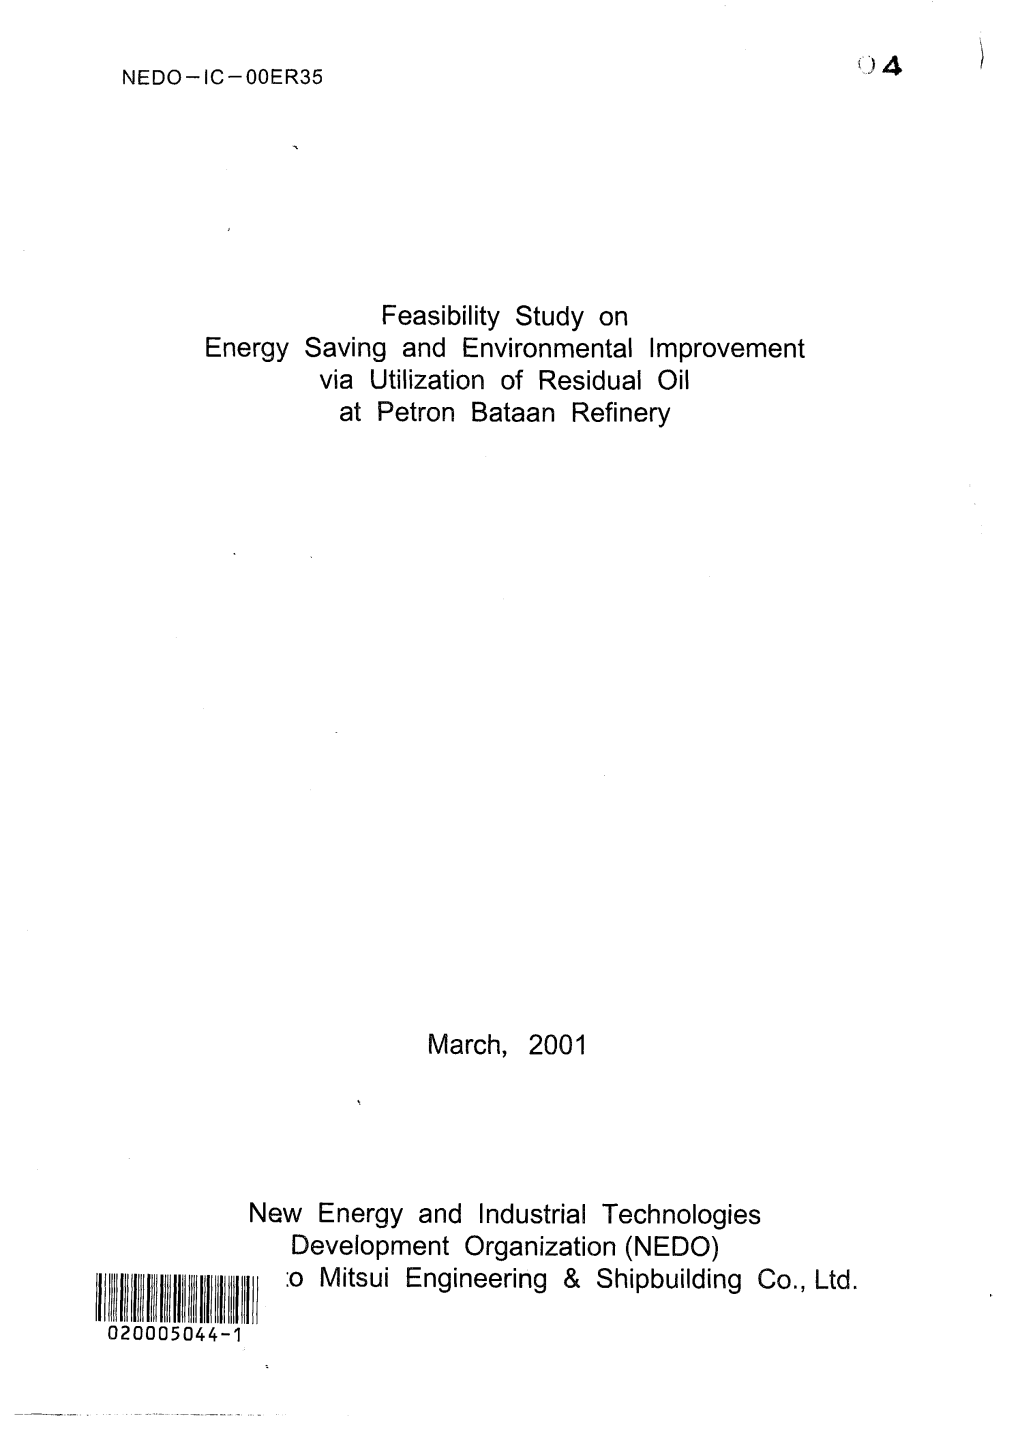 Feasibility Study on Energy Saving and Environmental Improvement Via Utilization of Residual Oil at Petron Bataan Refinery